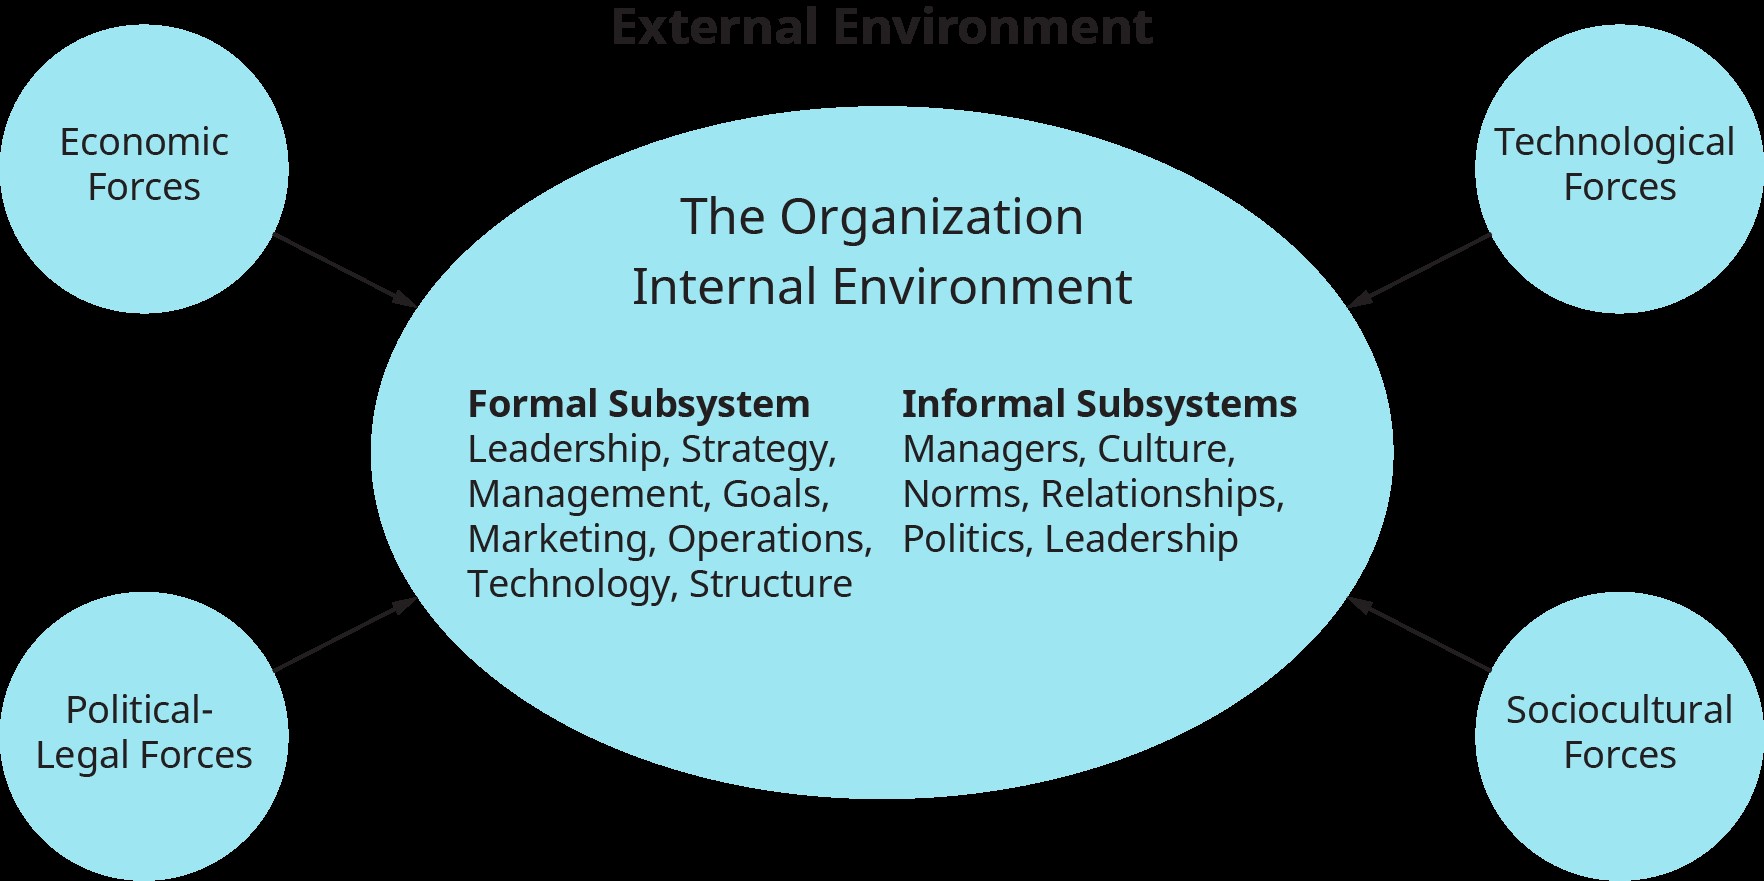 Figure 3.4: Internal Organization (Attribution: Copyright Rice University, OpenStax, under CC-BY 4.0 license)